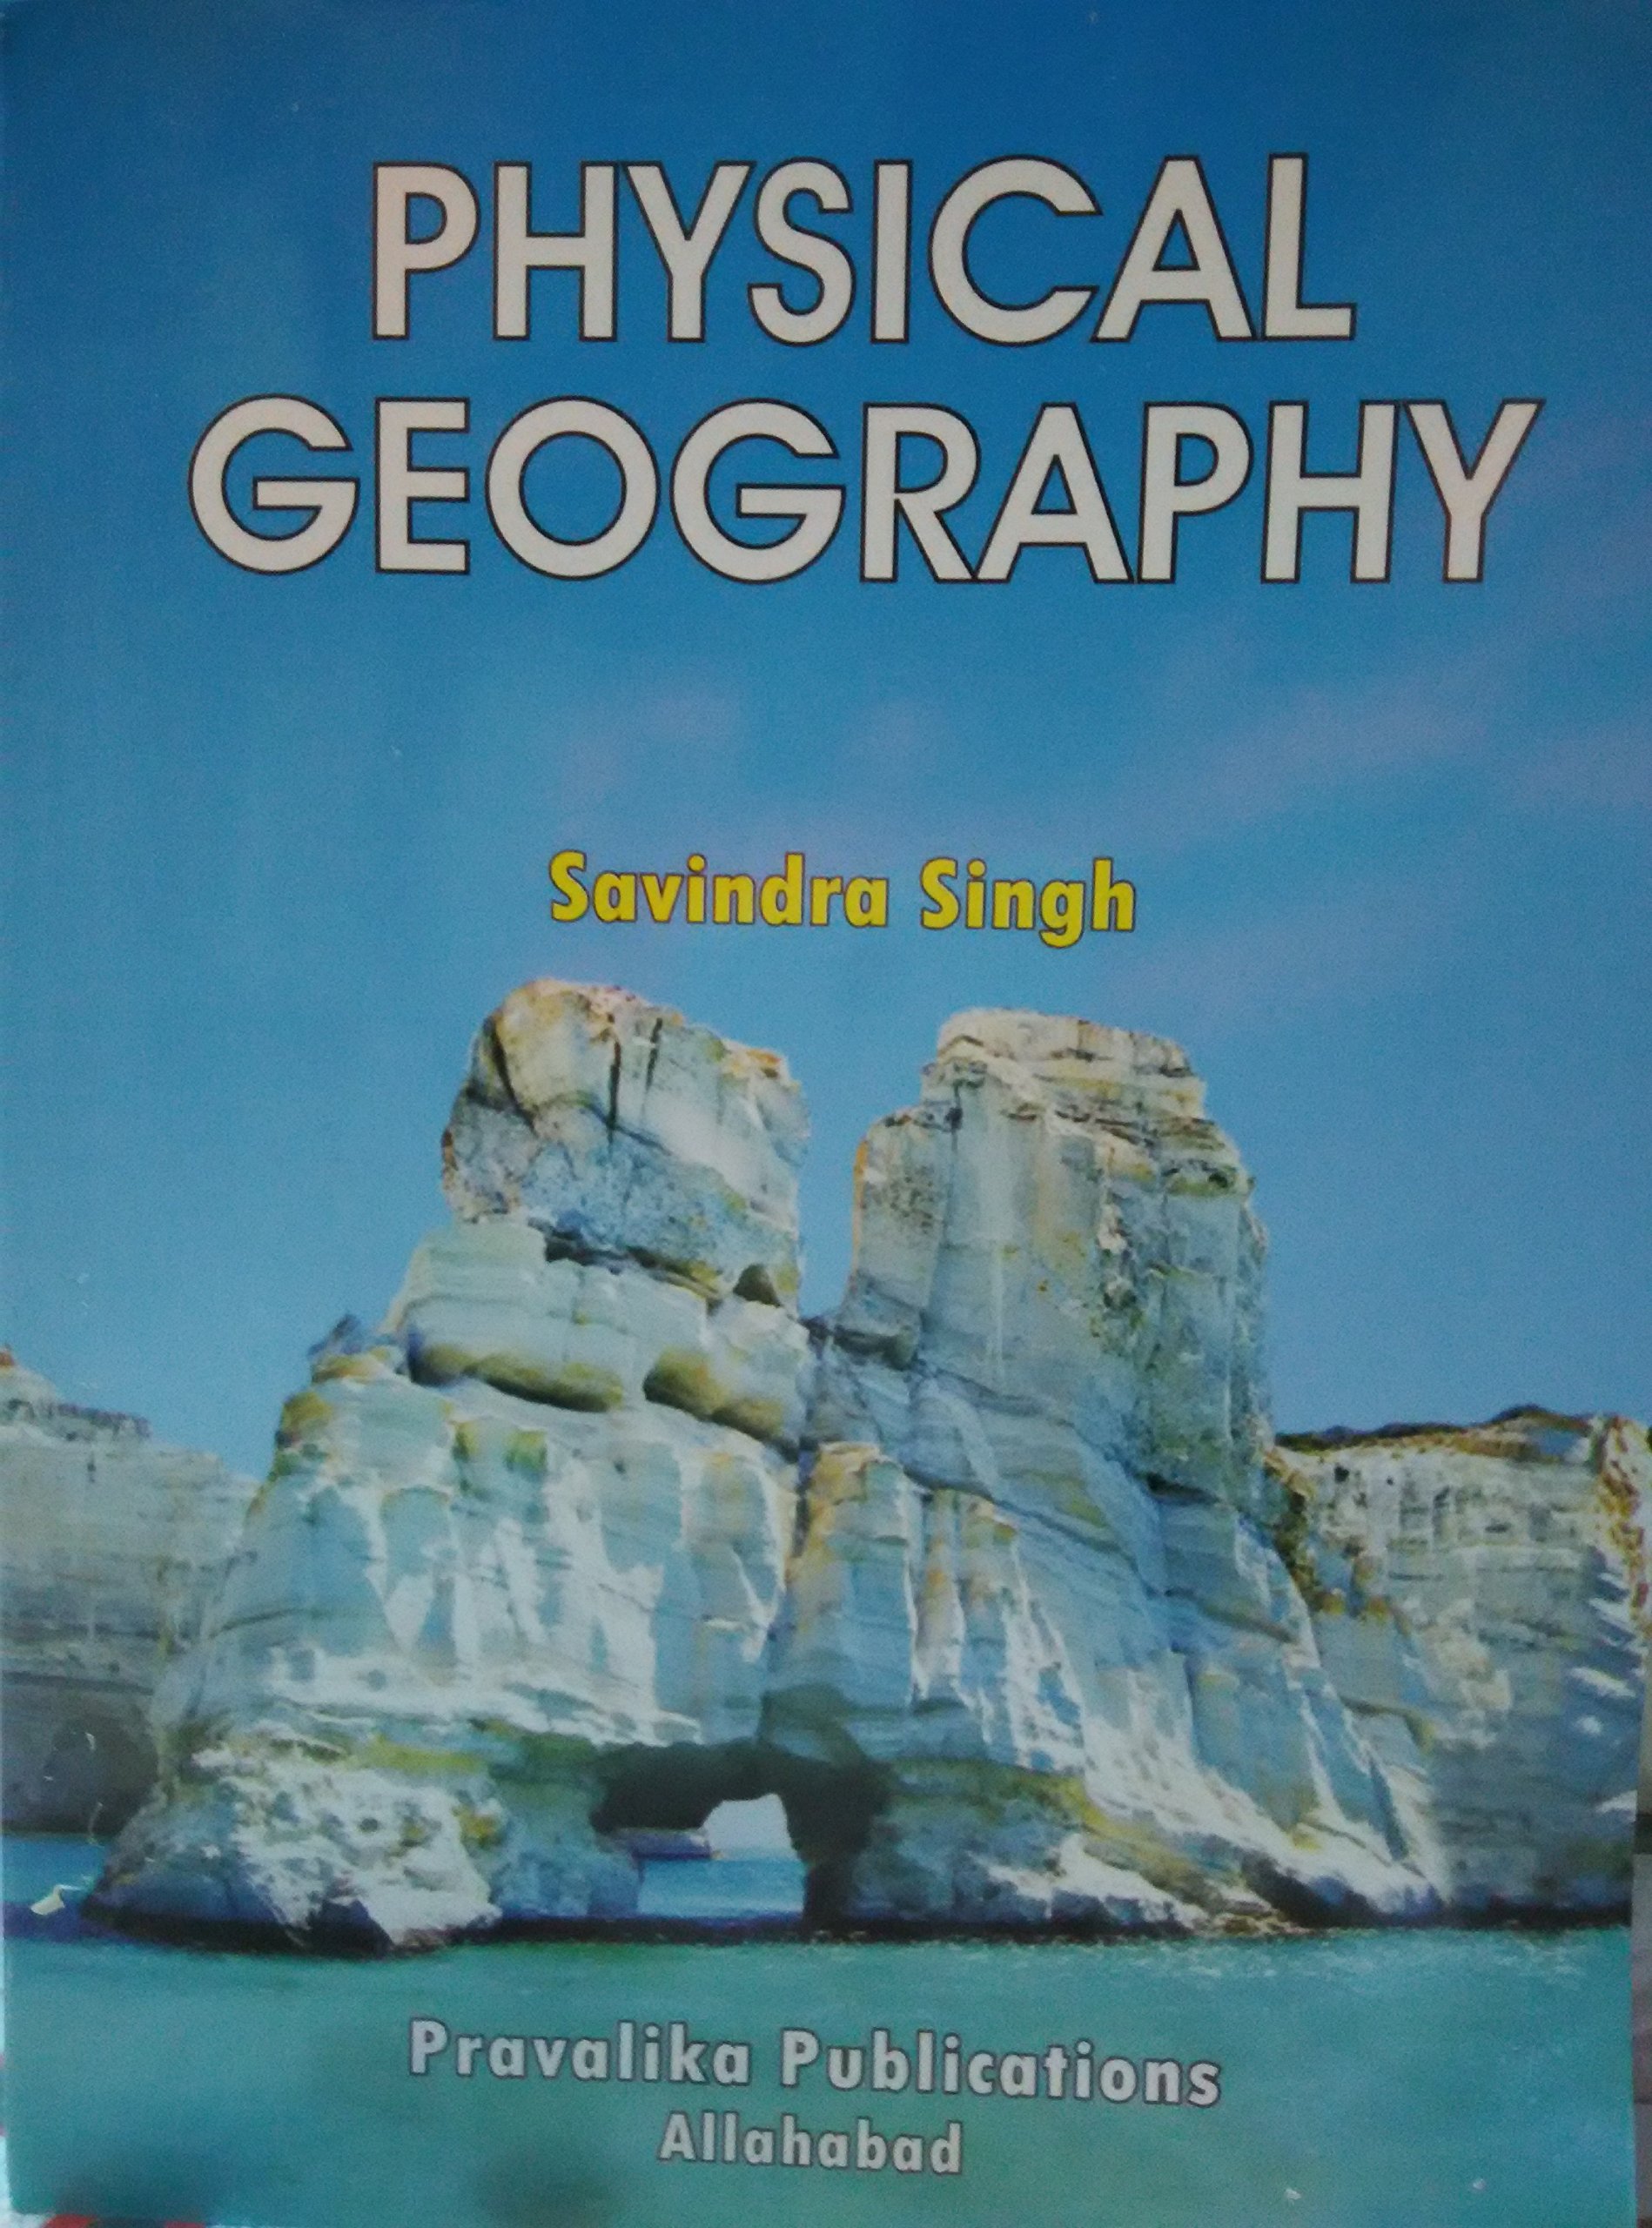 physical geography by savindra singh pdf